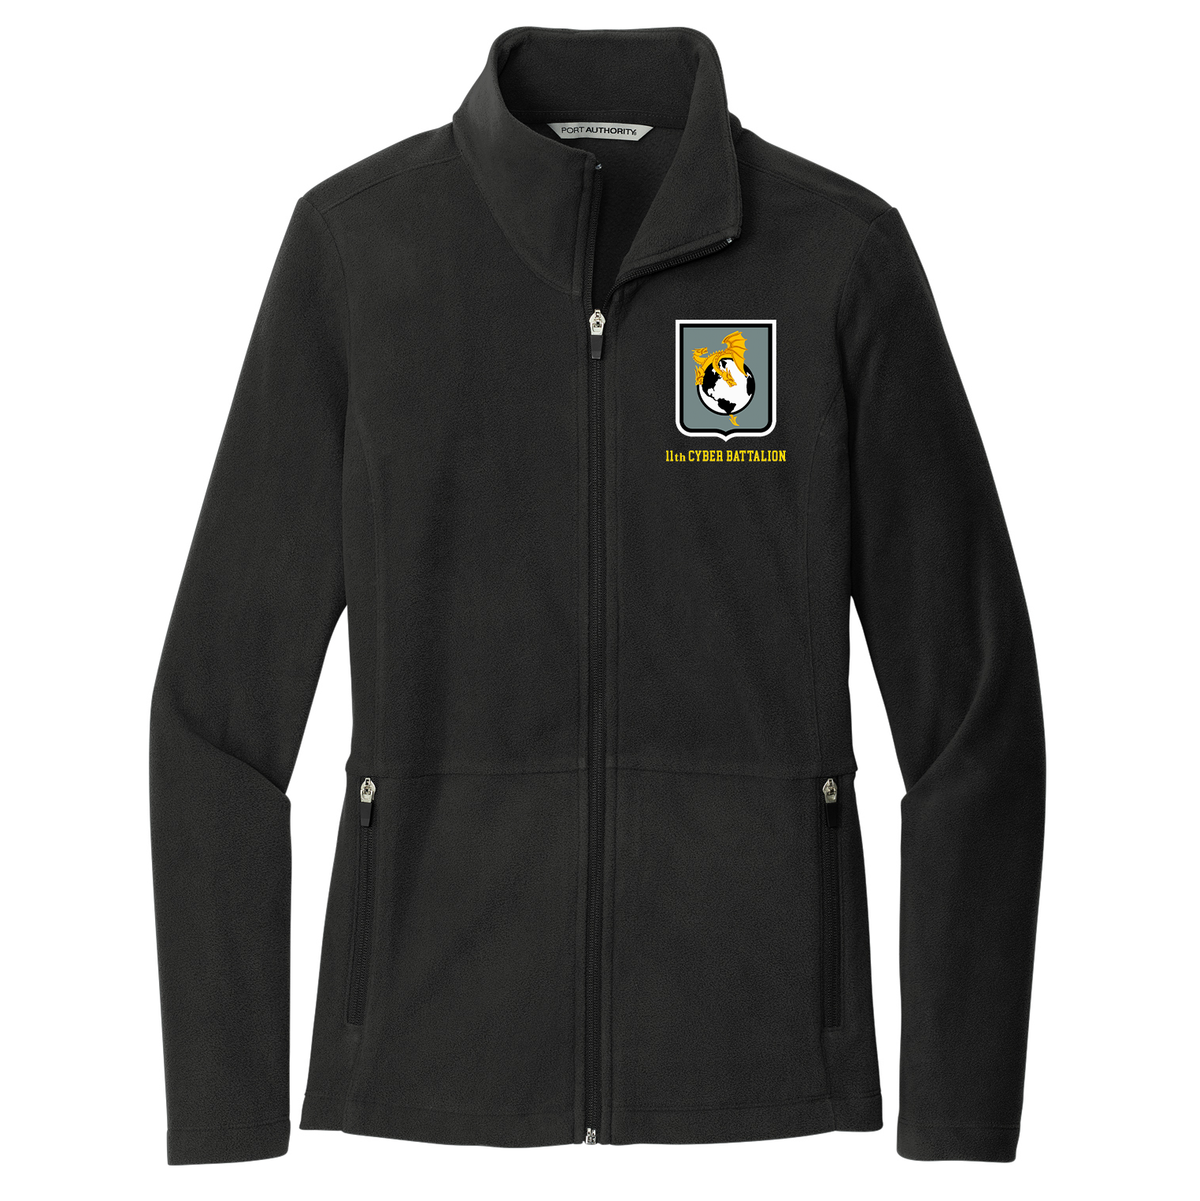 11th Cyber Battalion Ladies Accord Fleece Jacket